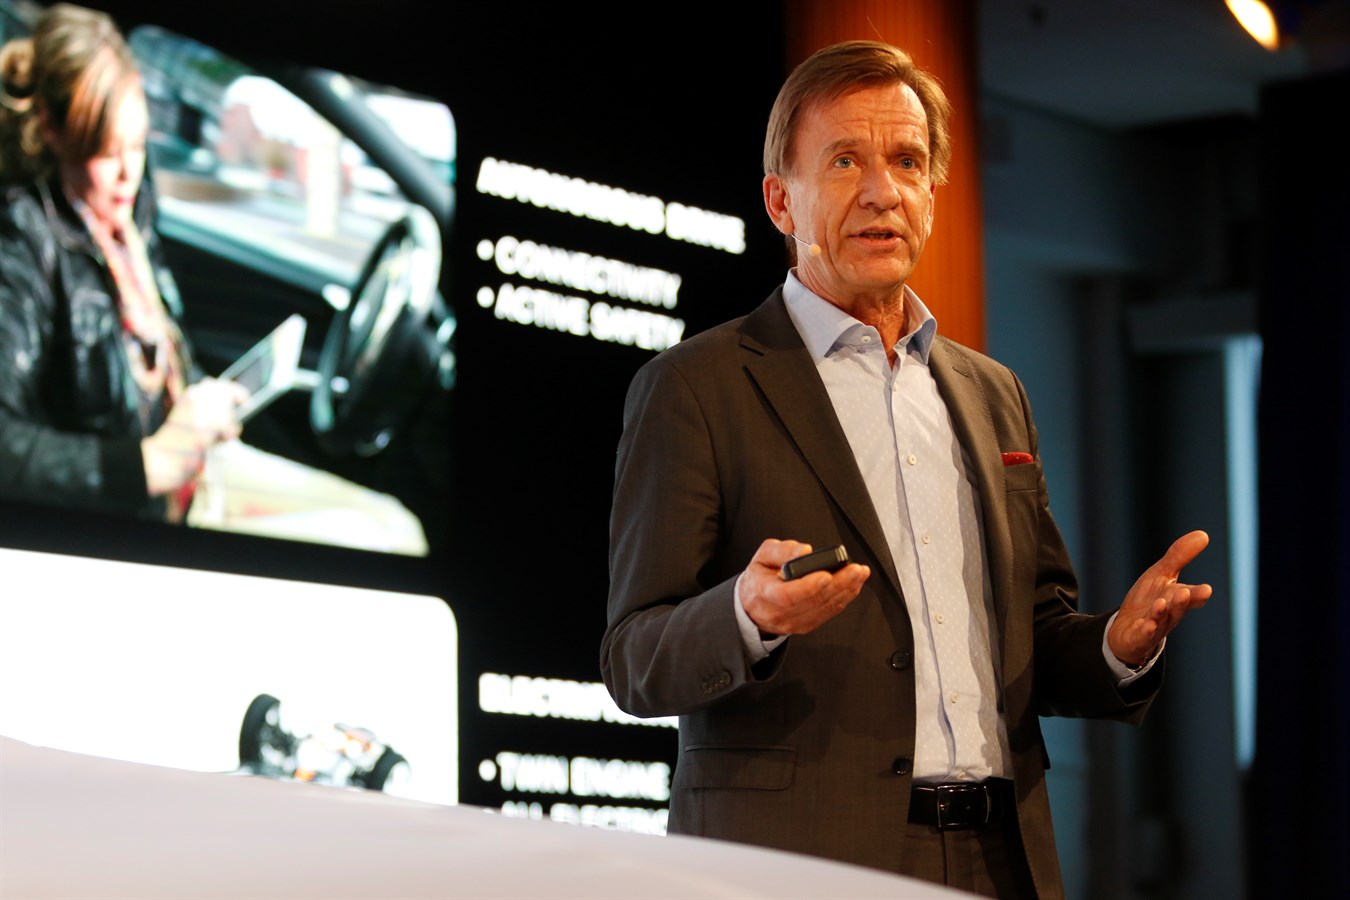 Håkan Samuelsson, President and CEO, Volvo Car Group